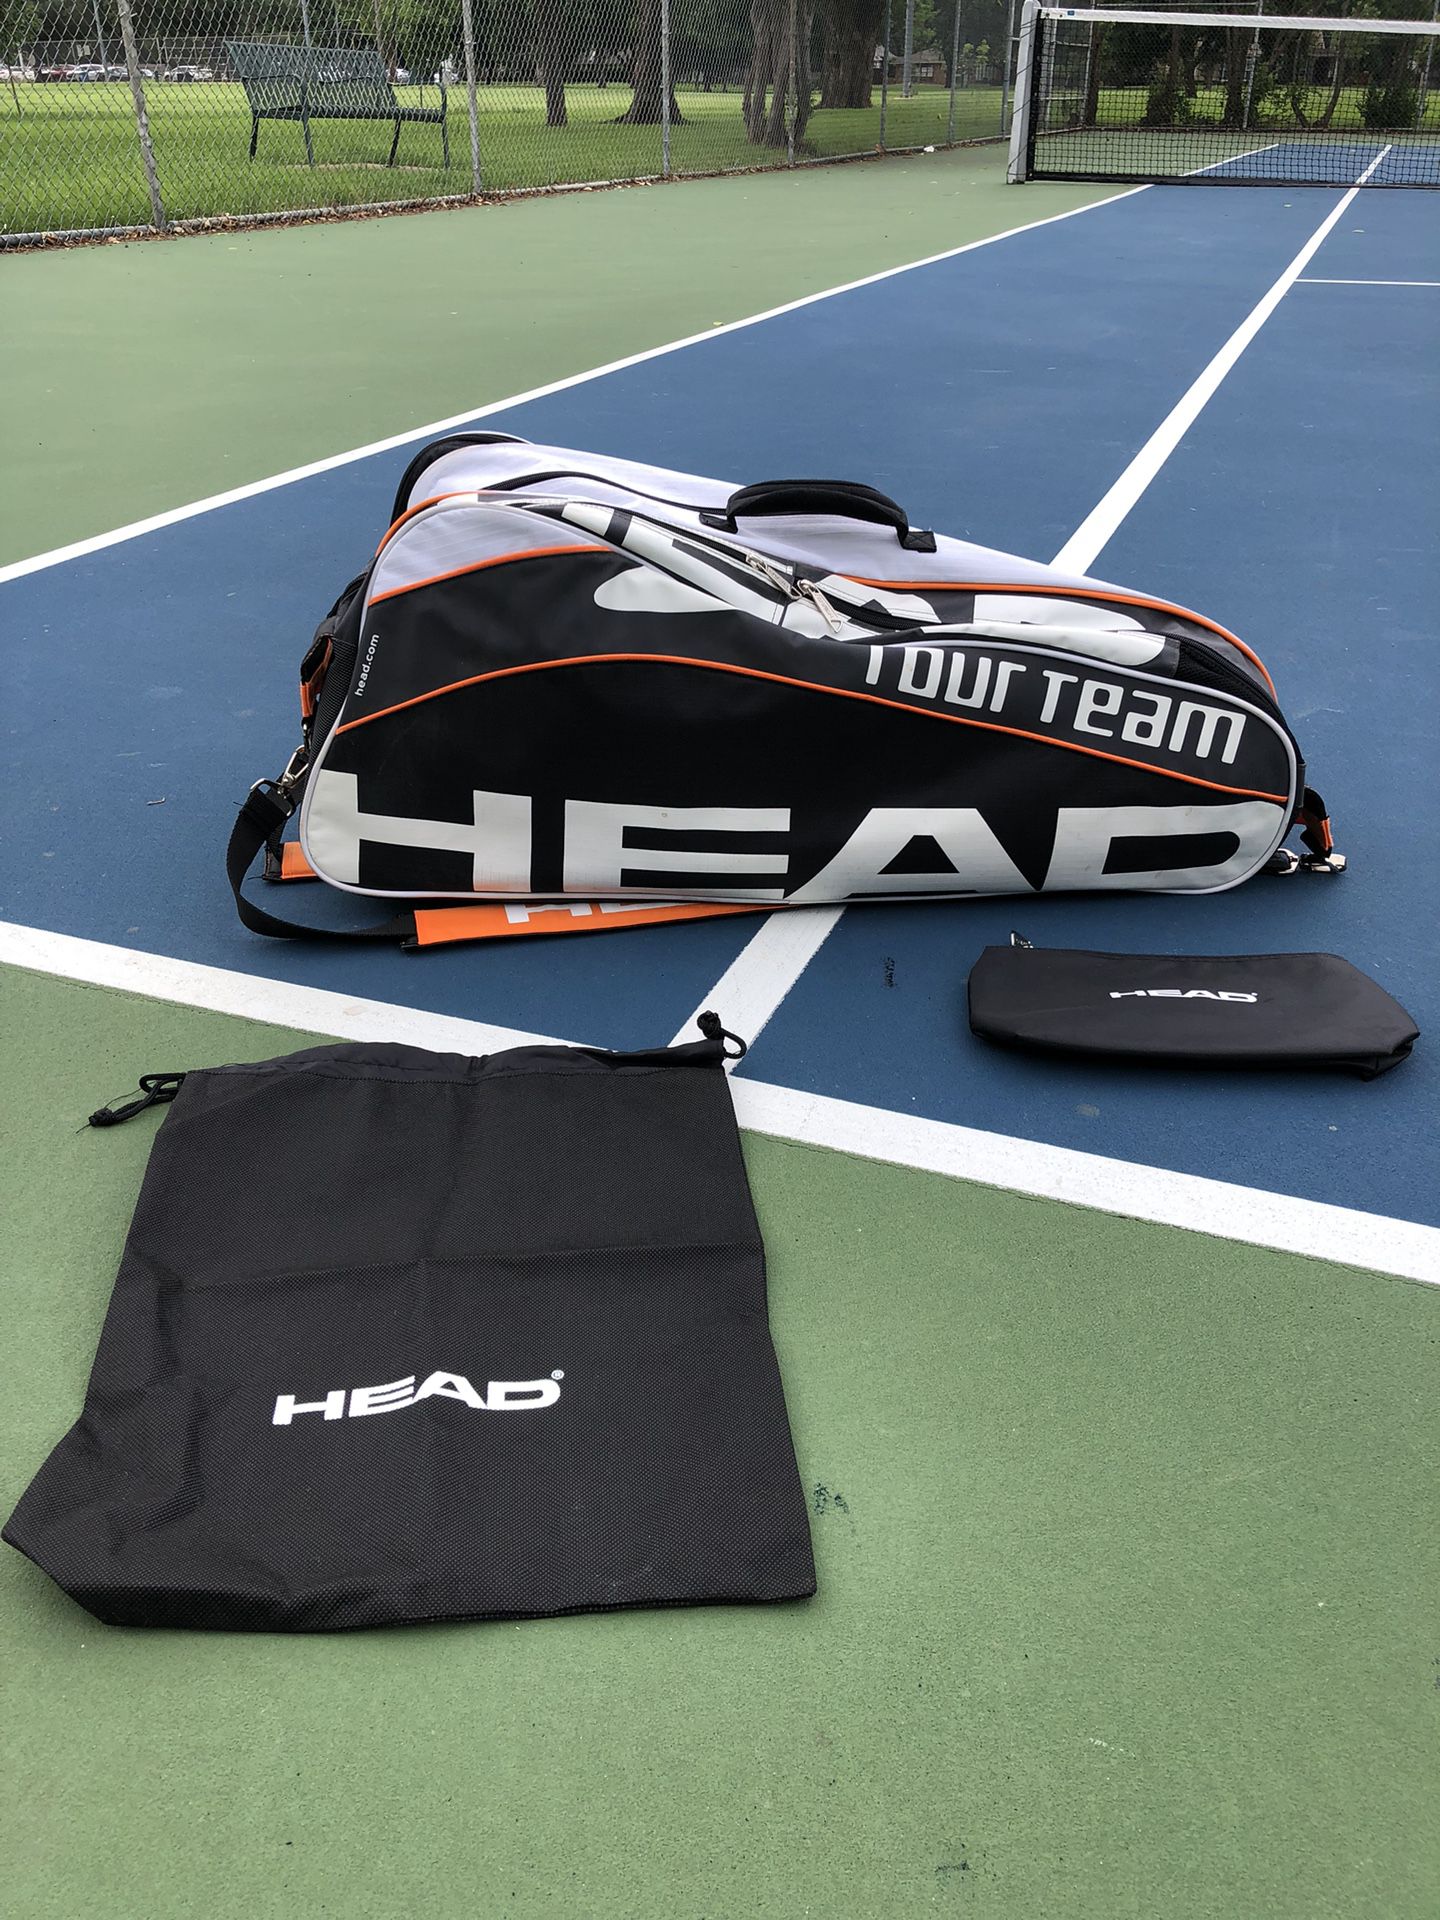 HEAD TOUR TEAM Thermal Climate Control Tennis Bag Backpack 2 Shoulder Straps CCT